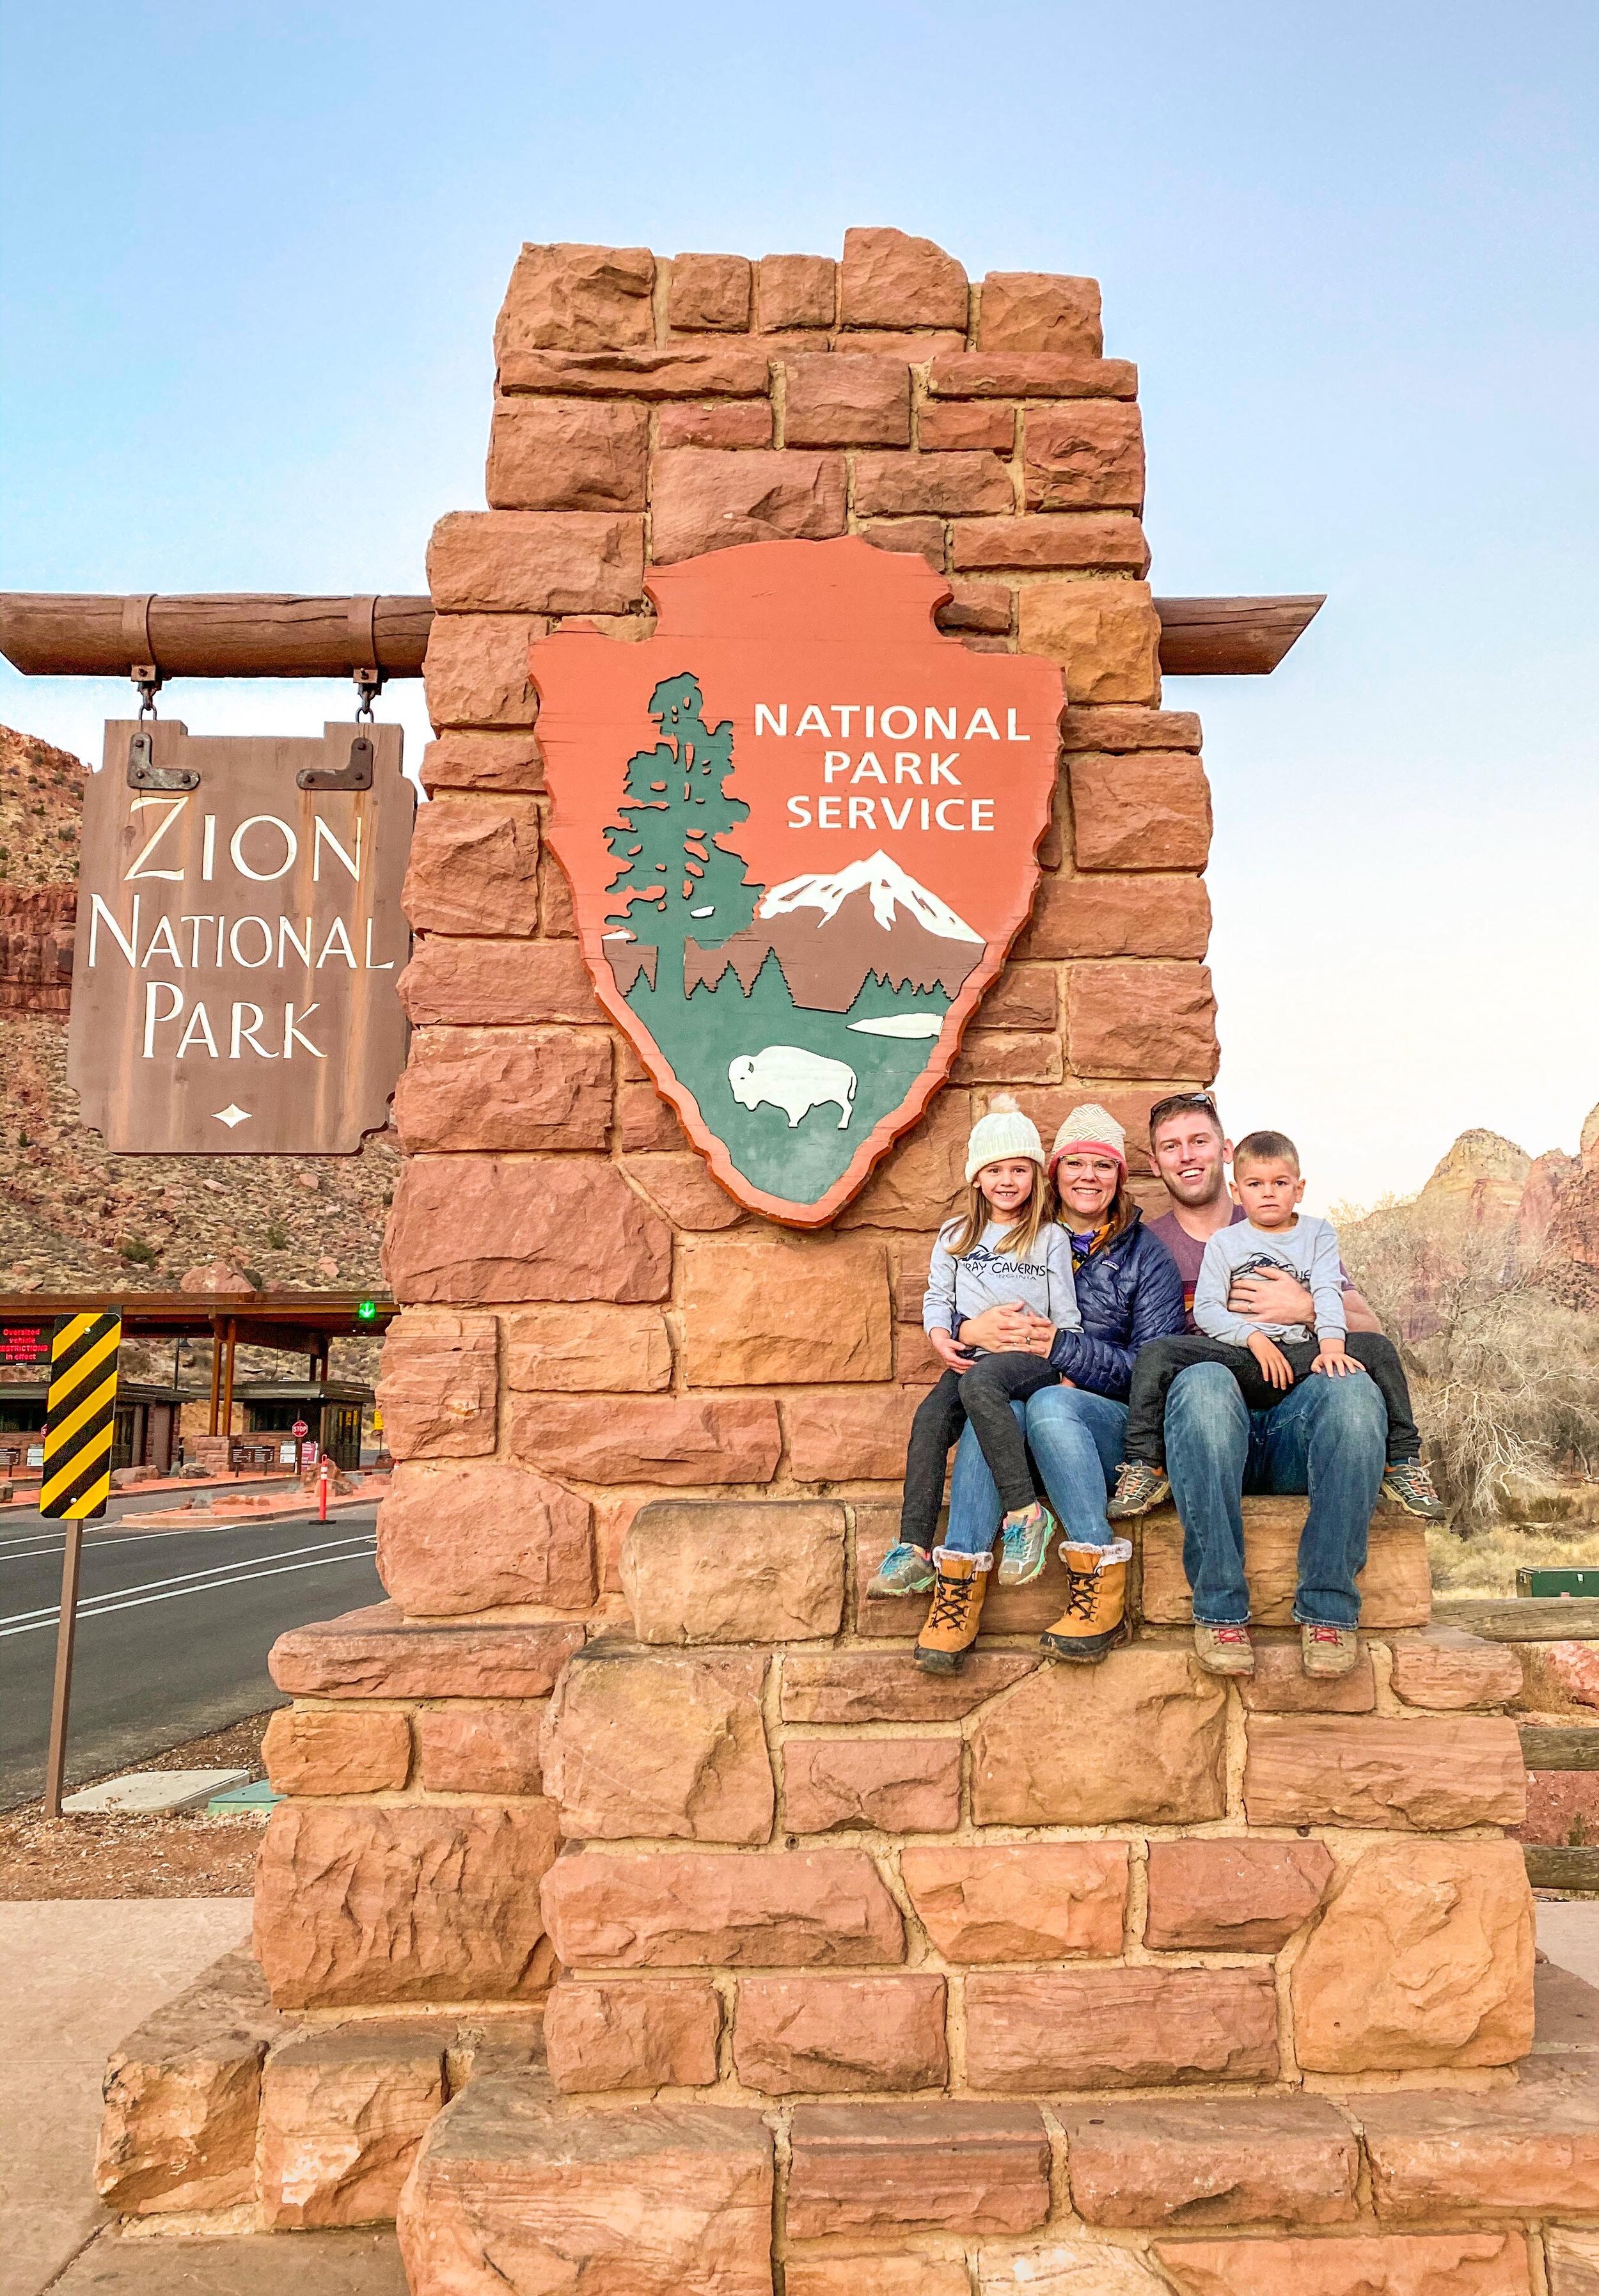 Obligatory national park sign photo!